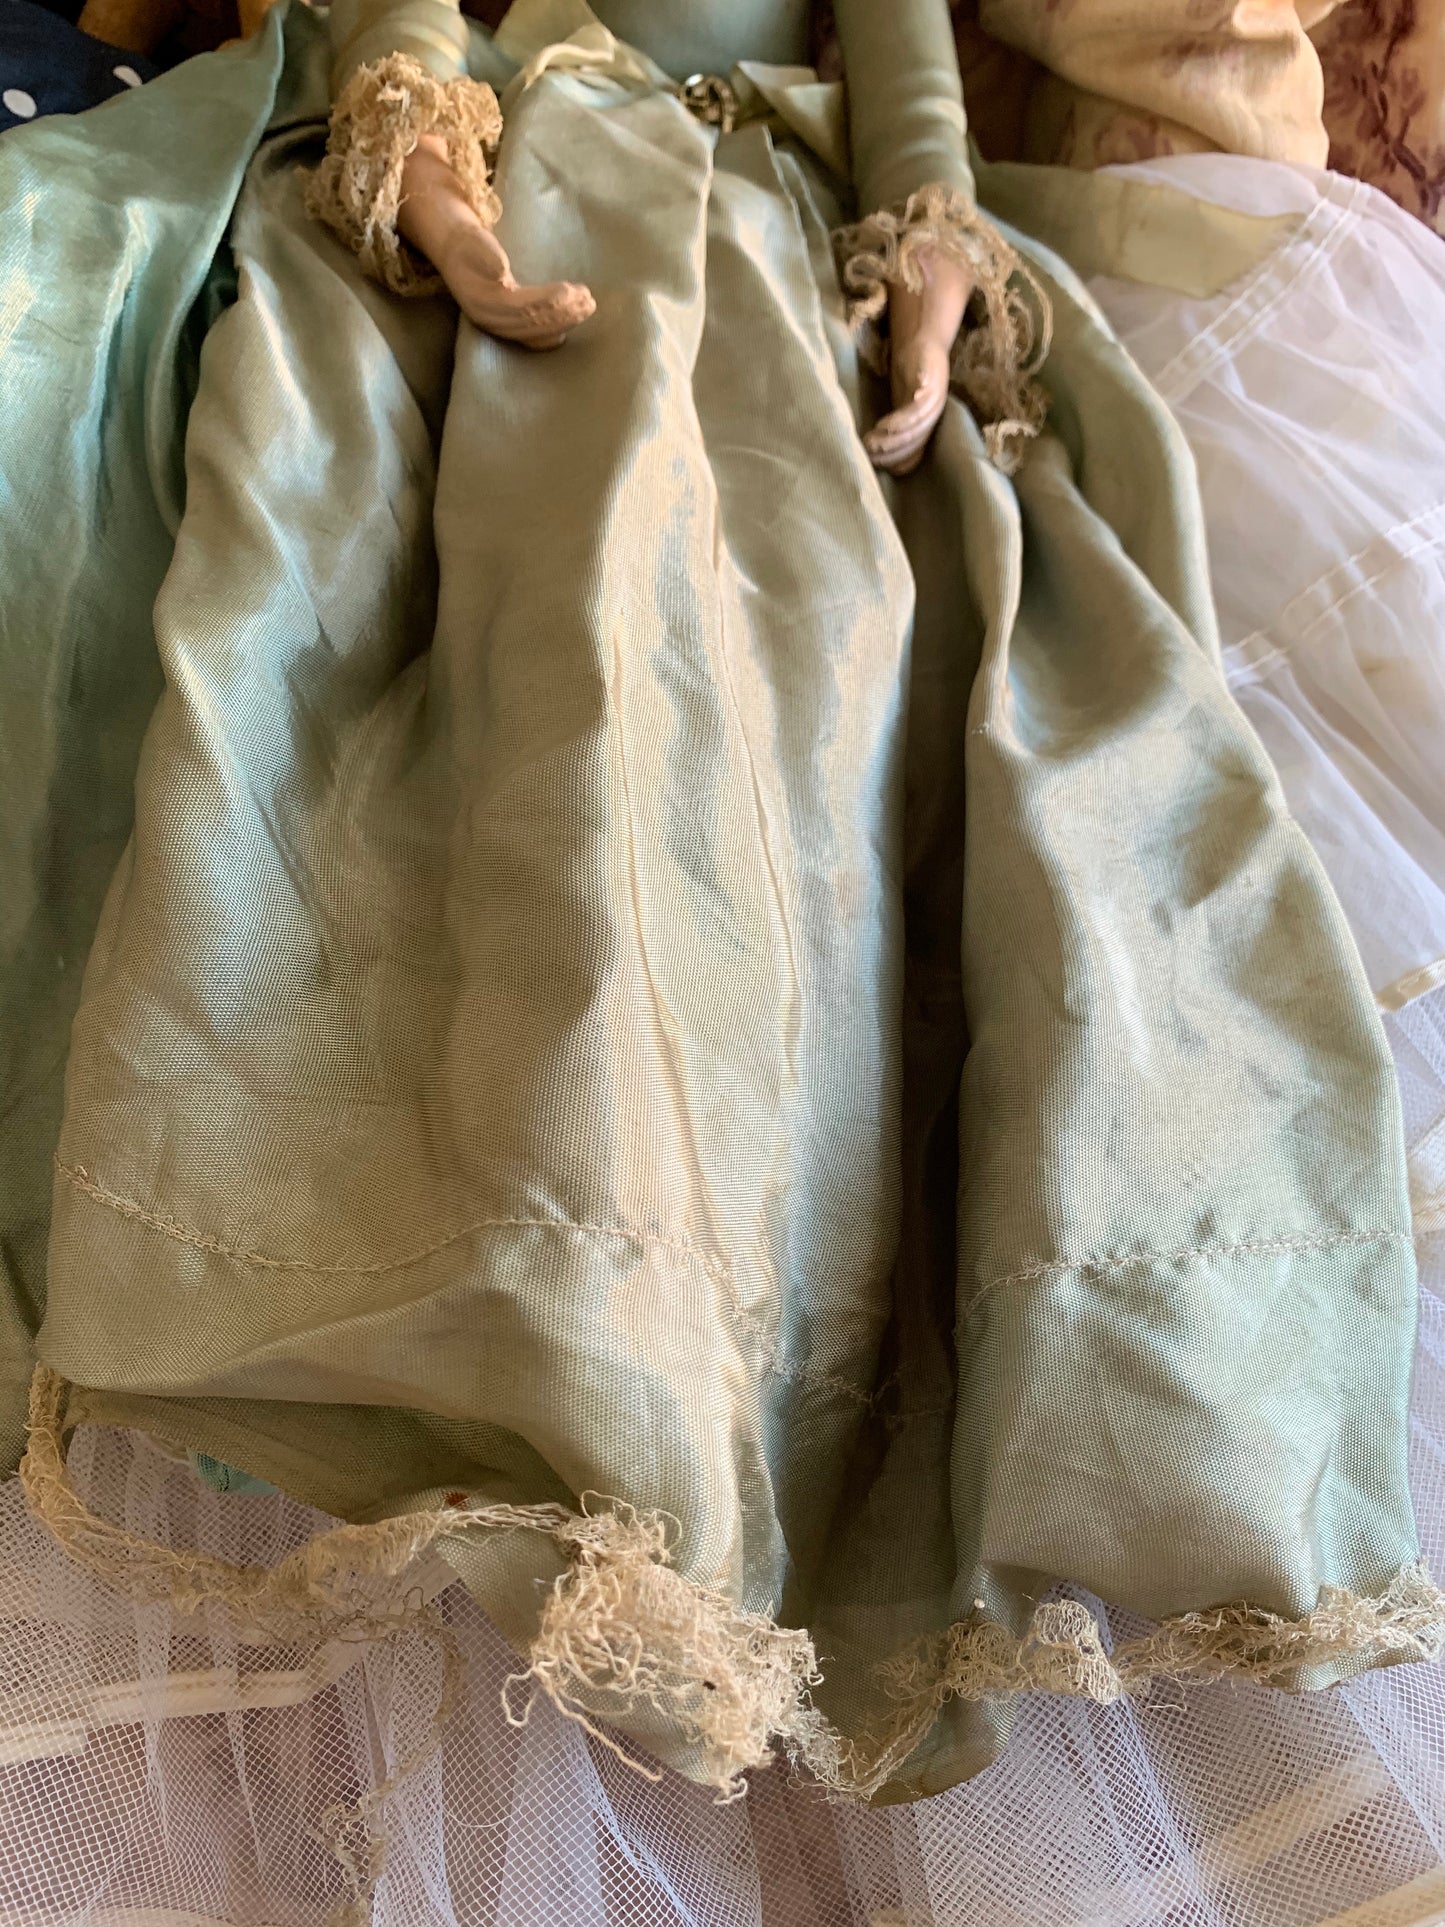 Vintage blond flapper boudoir doll